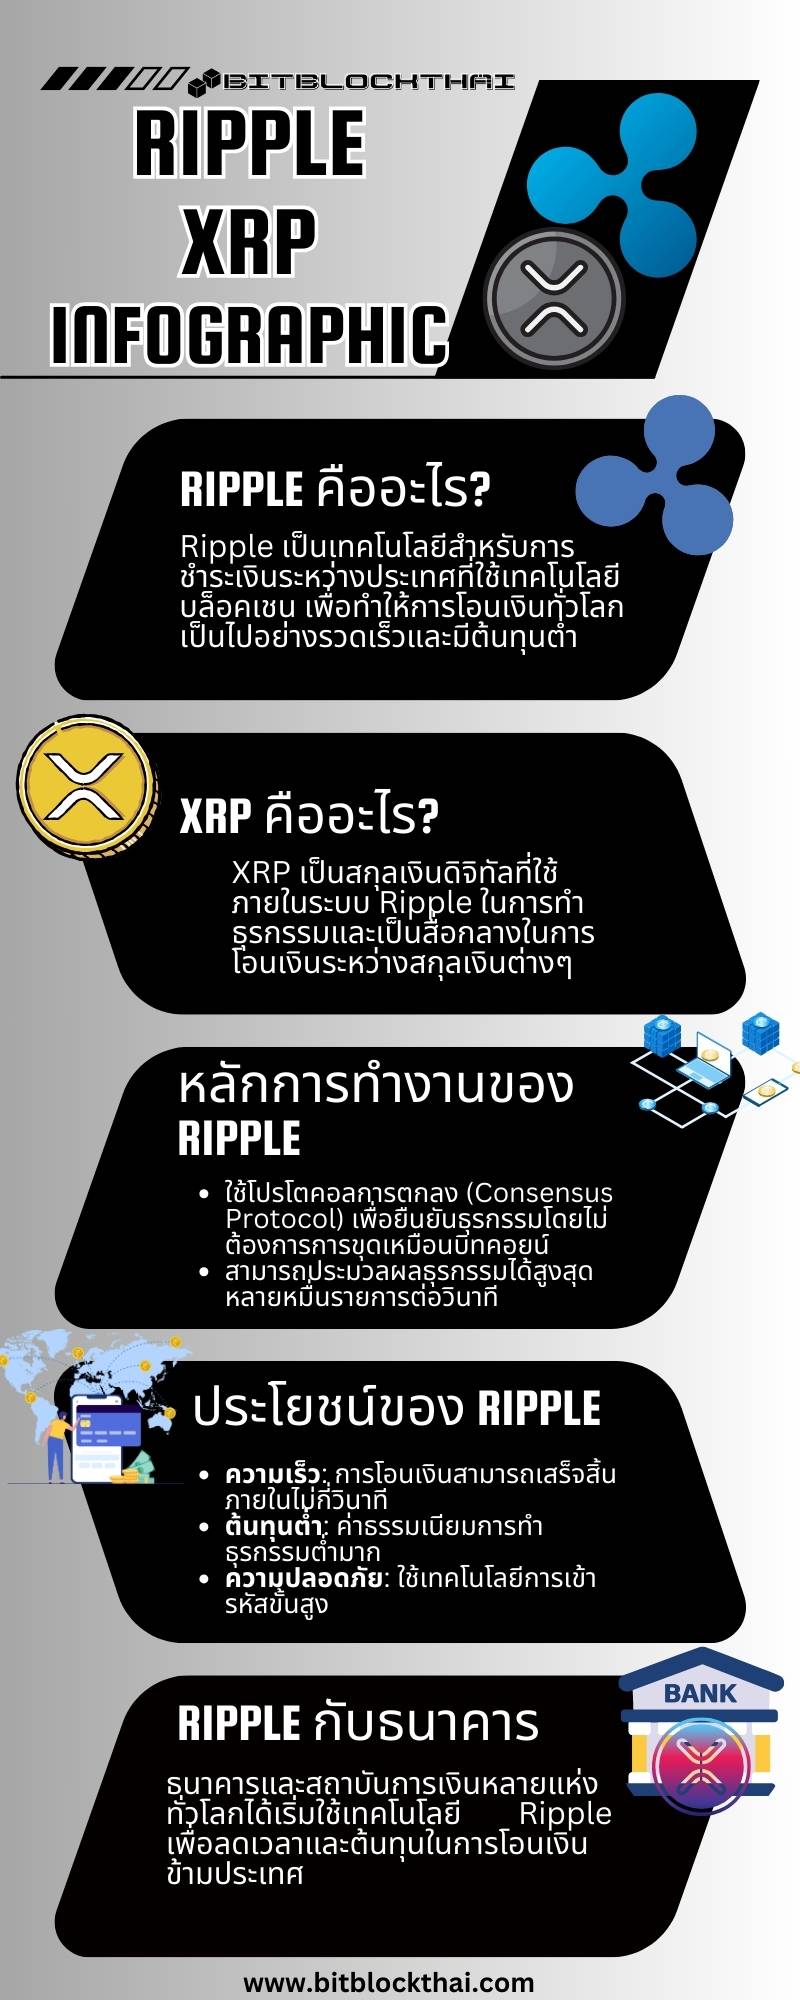 ripple xrp infographic thai